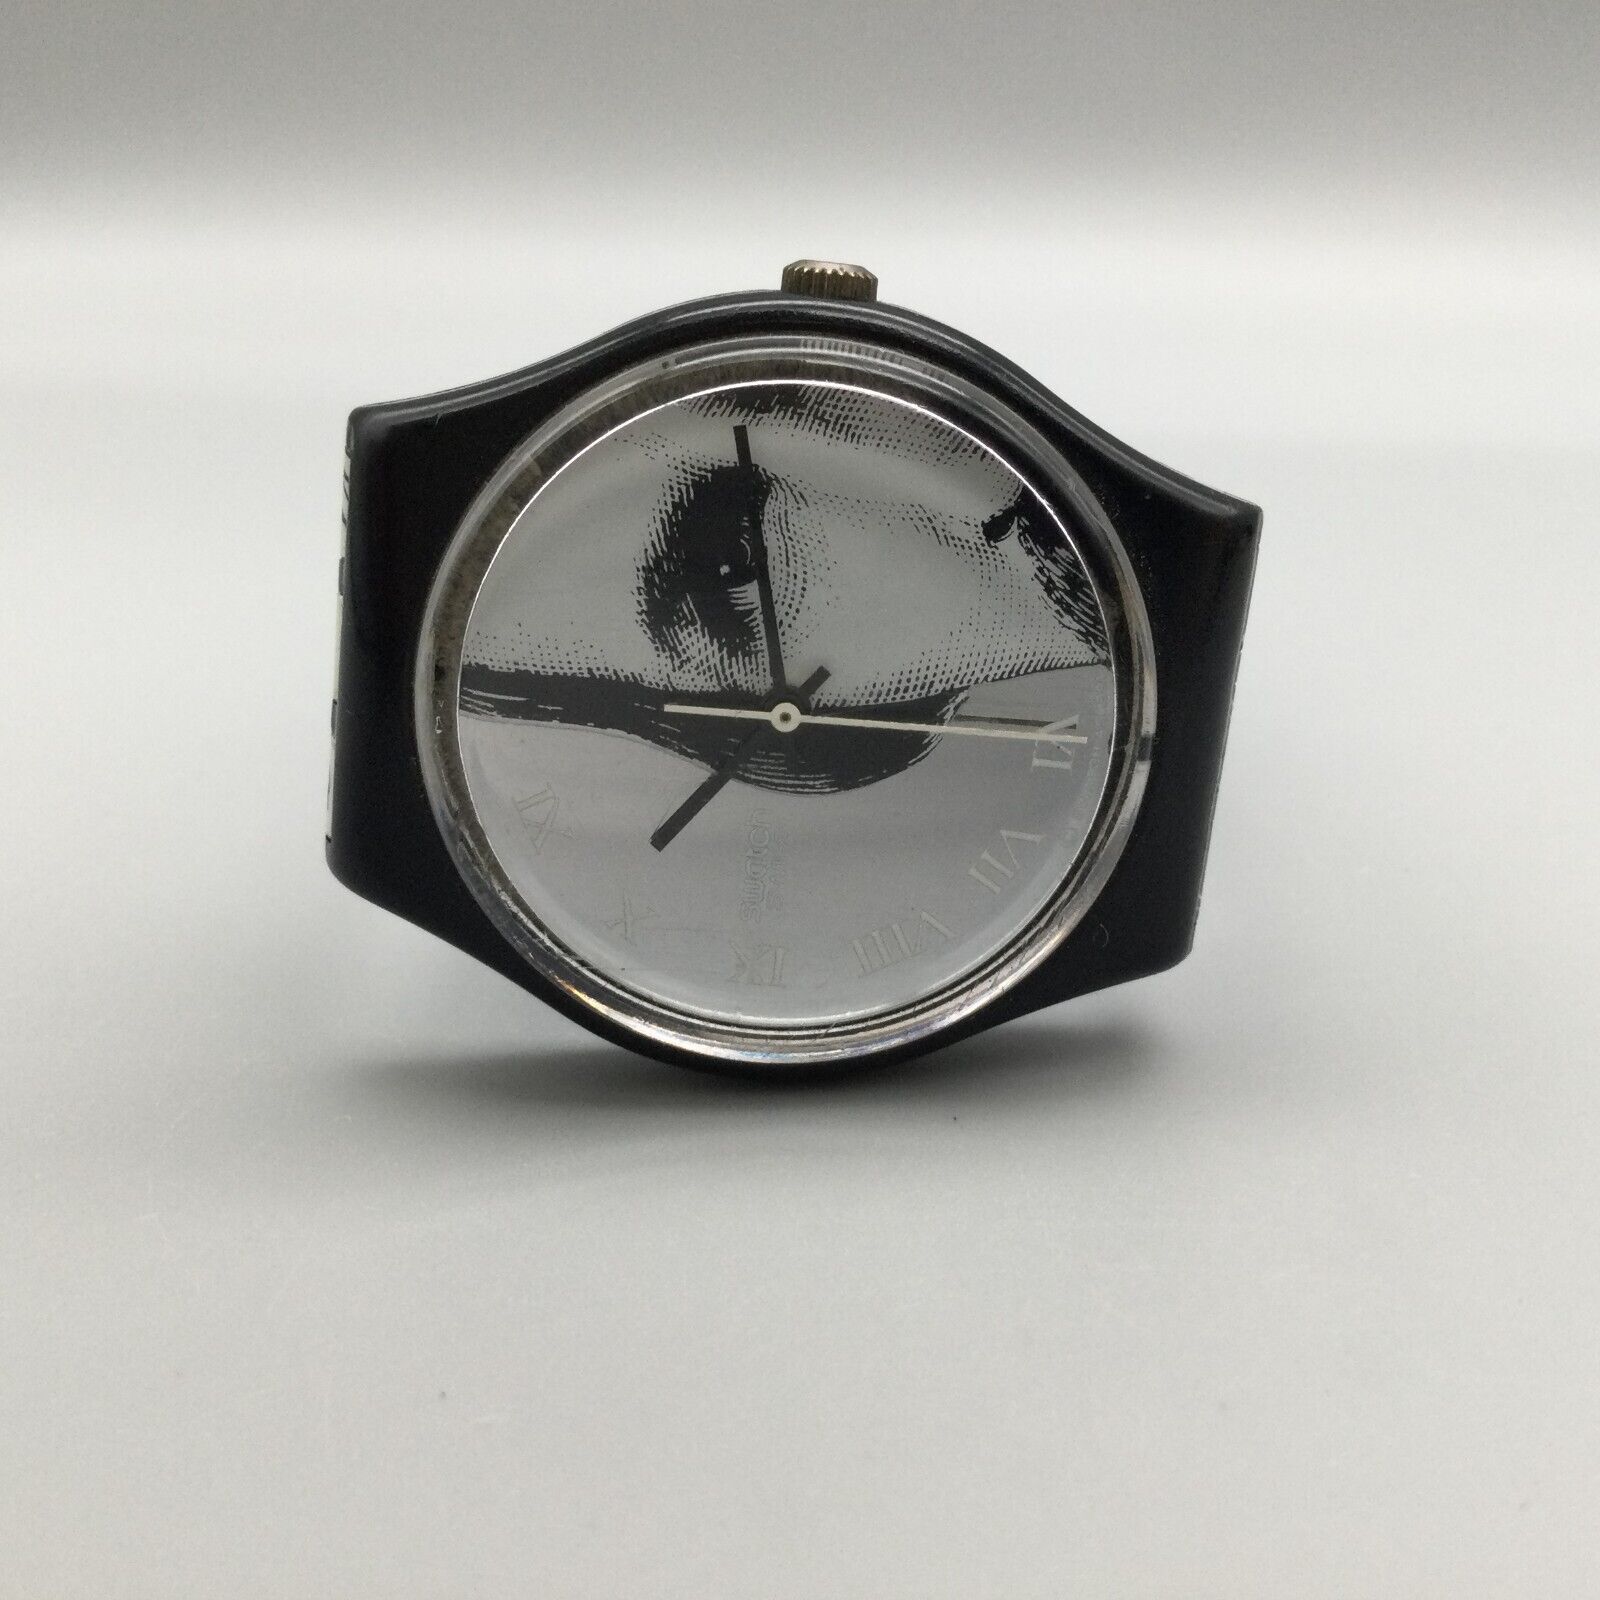 BRACELET WATCH swatch, Glance, 1992, Design Piero Fornasetti, quartz.  Clocks & Watches - Wristwatches - Auctionet